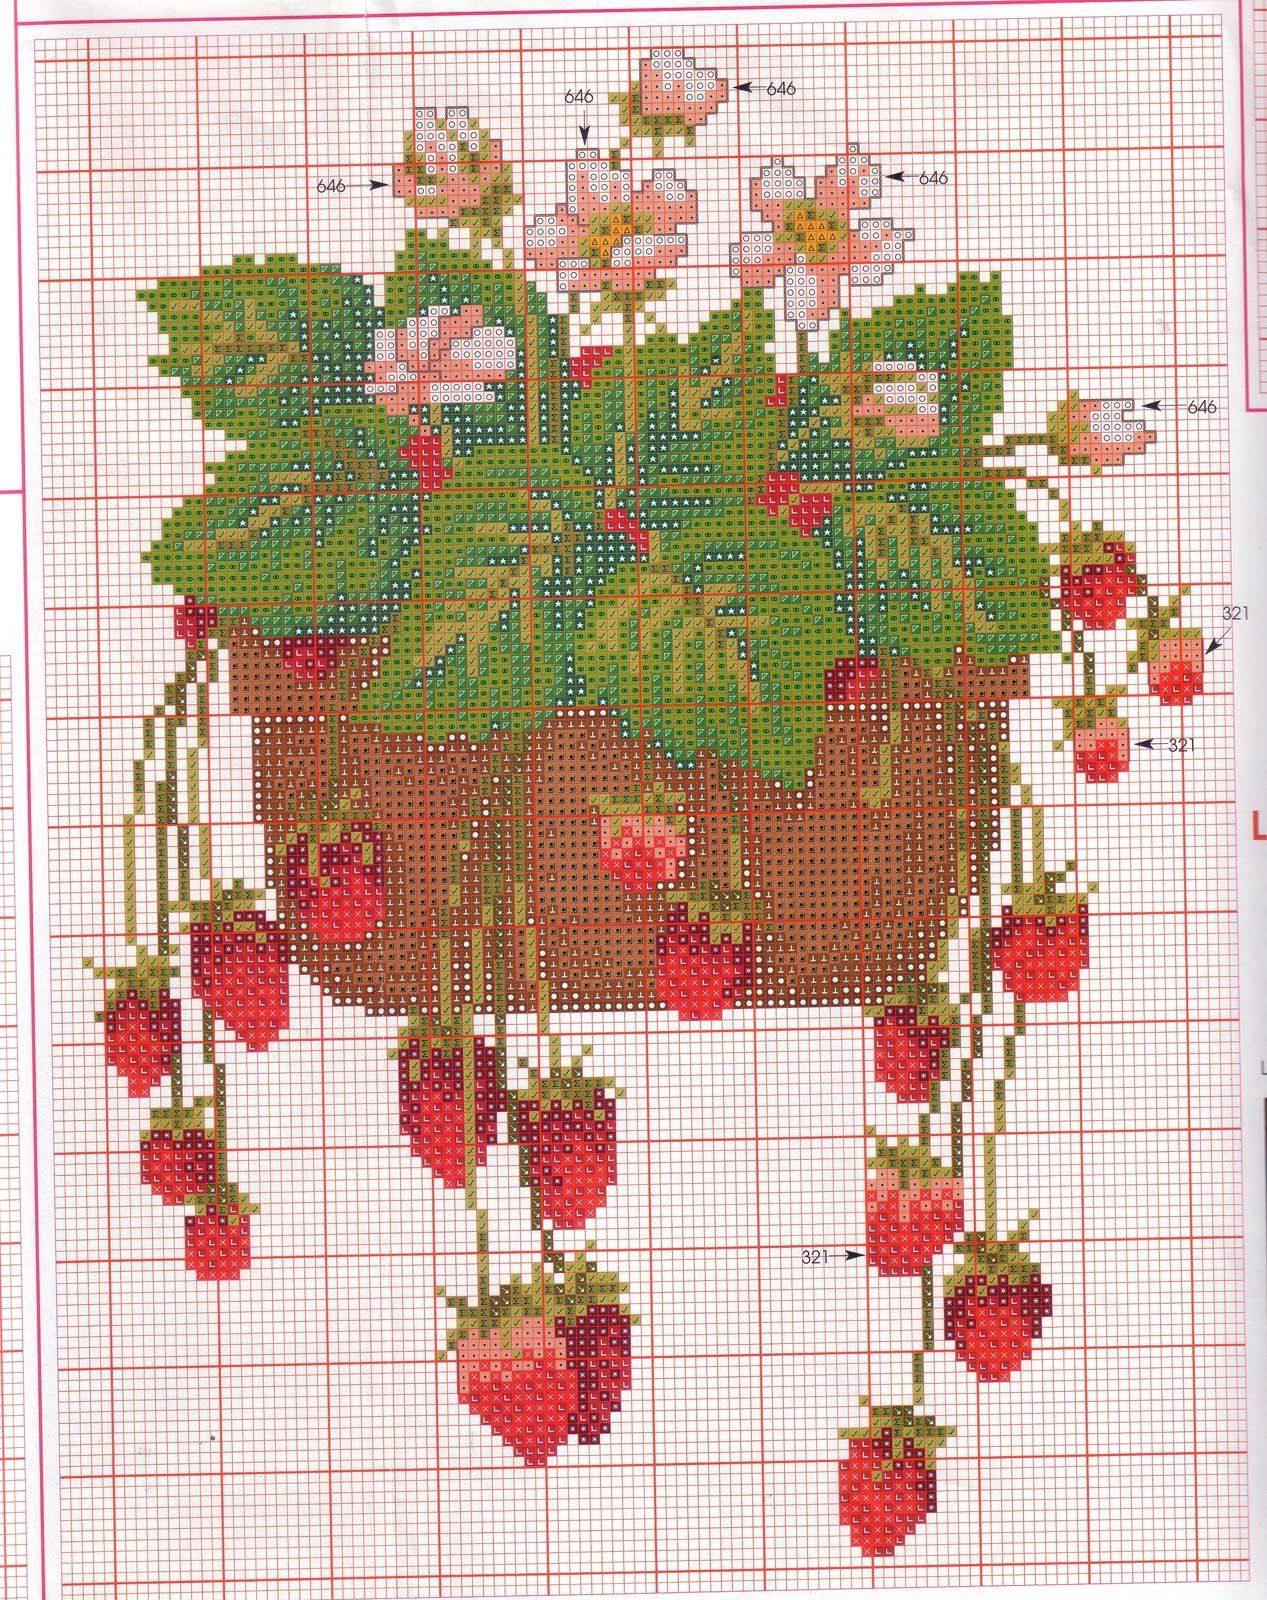 strawberry fruit in pots